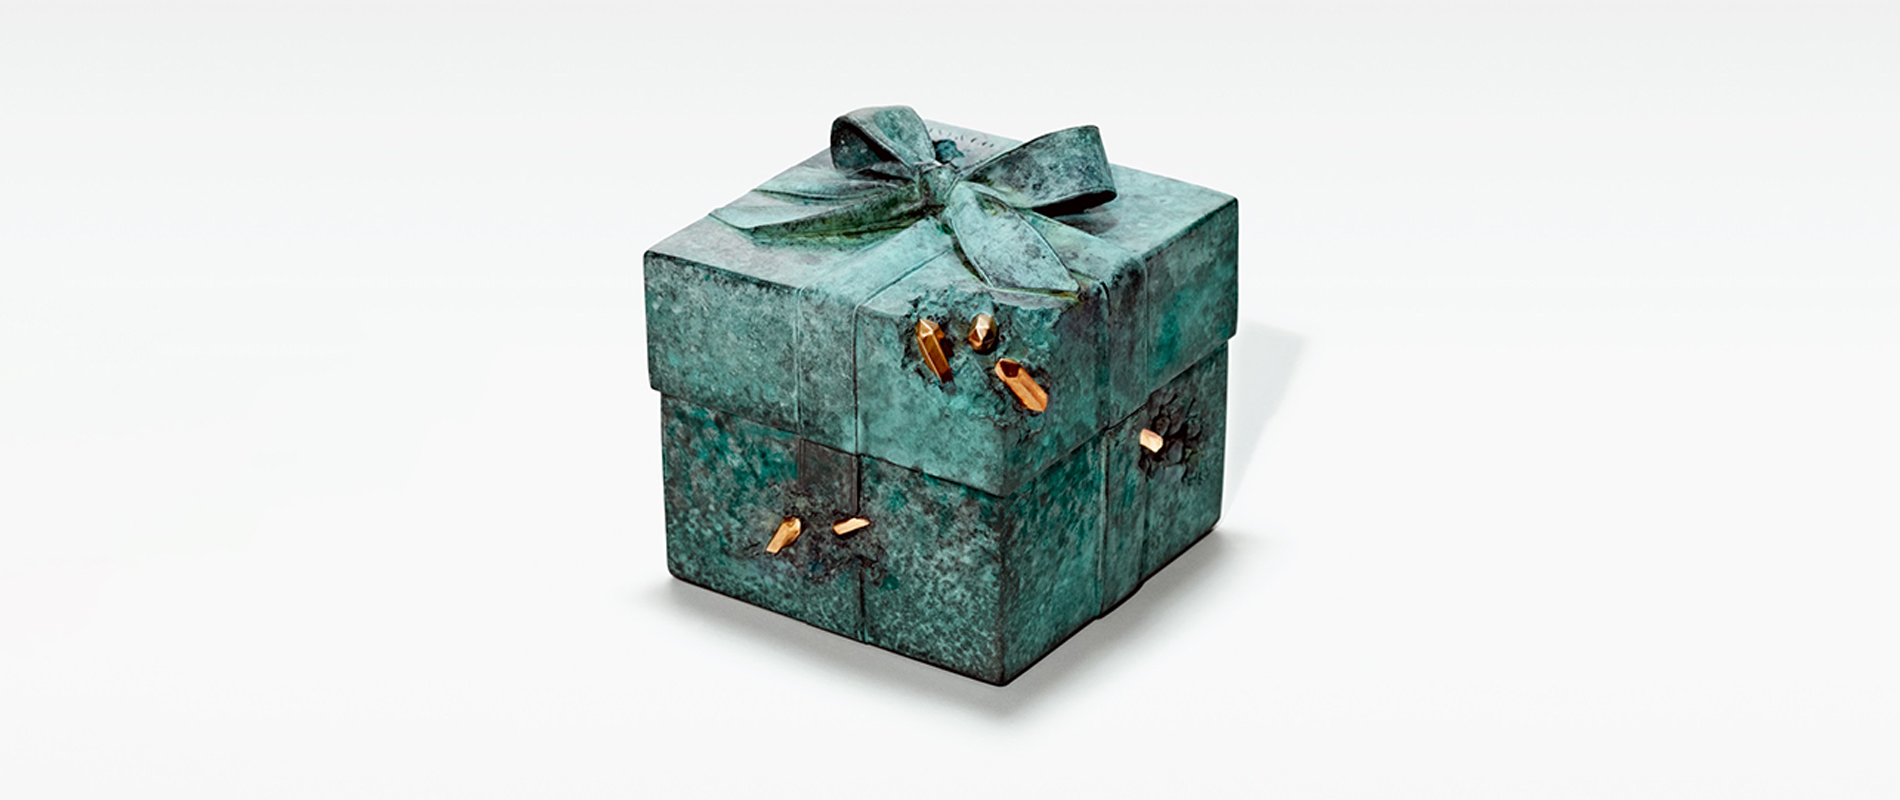 Tiffany & Co. - Each hand-crafted Daniel Arsham sculpture